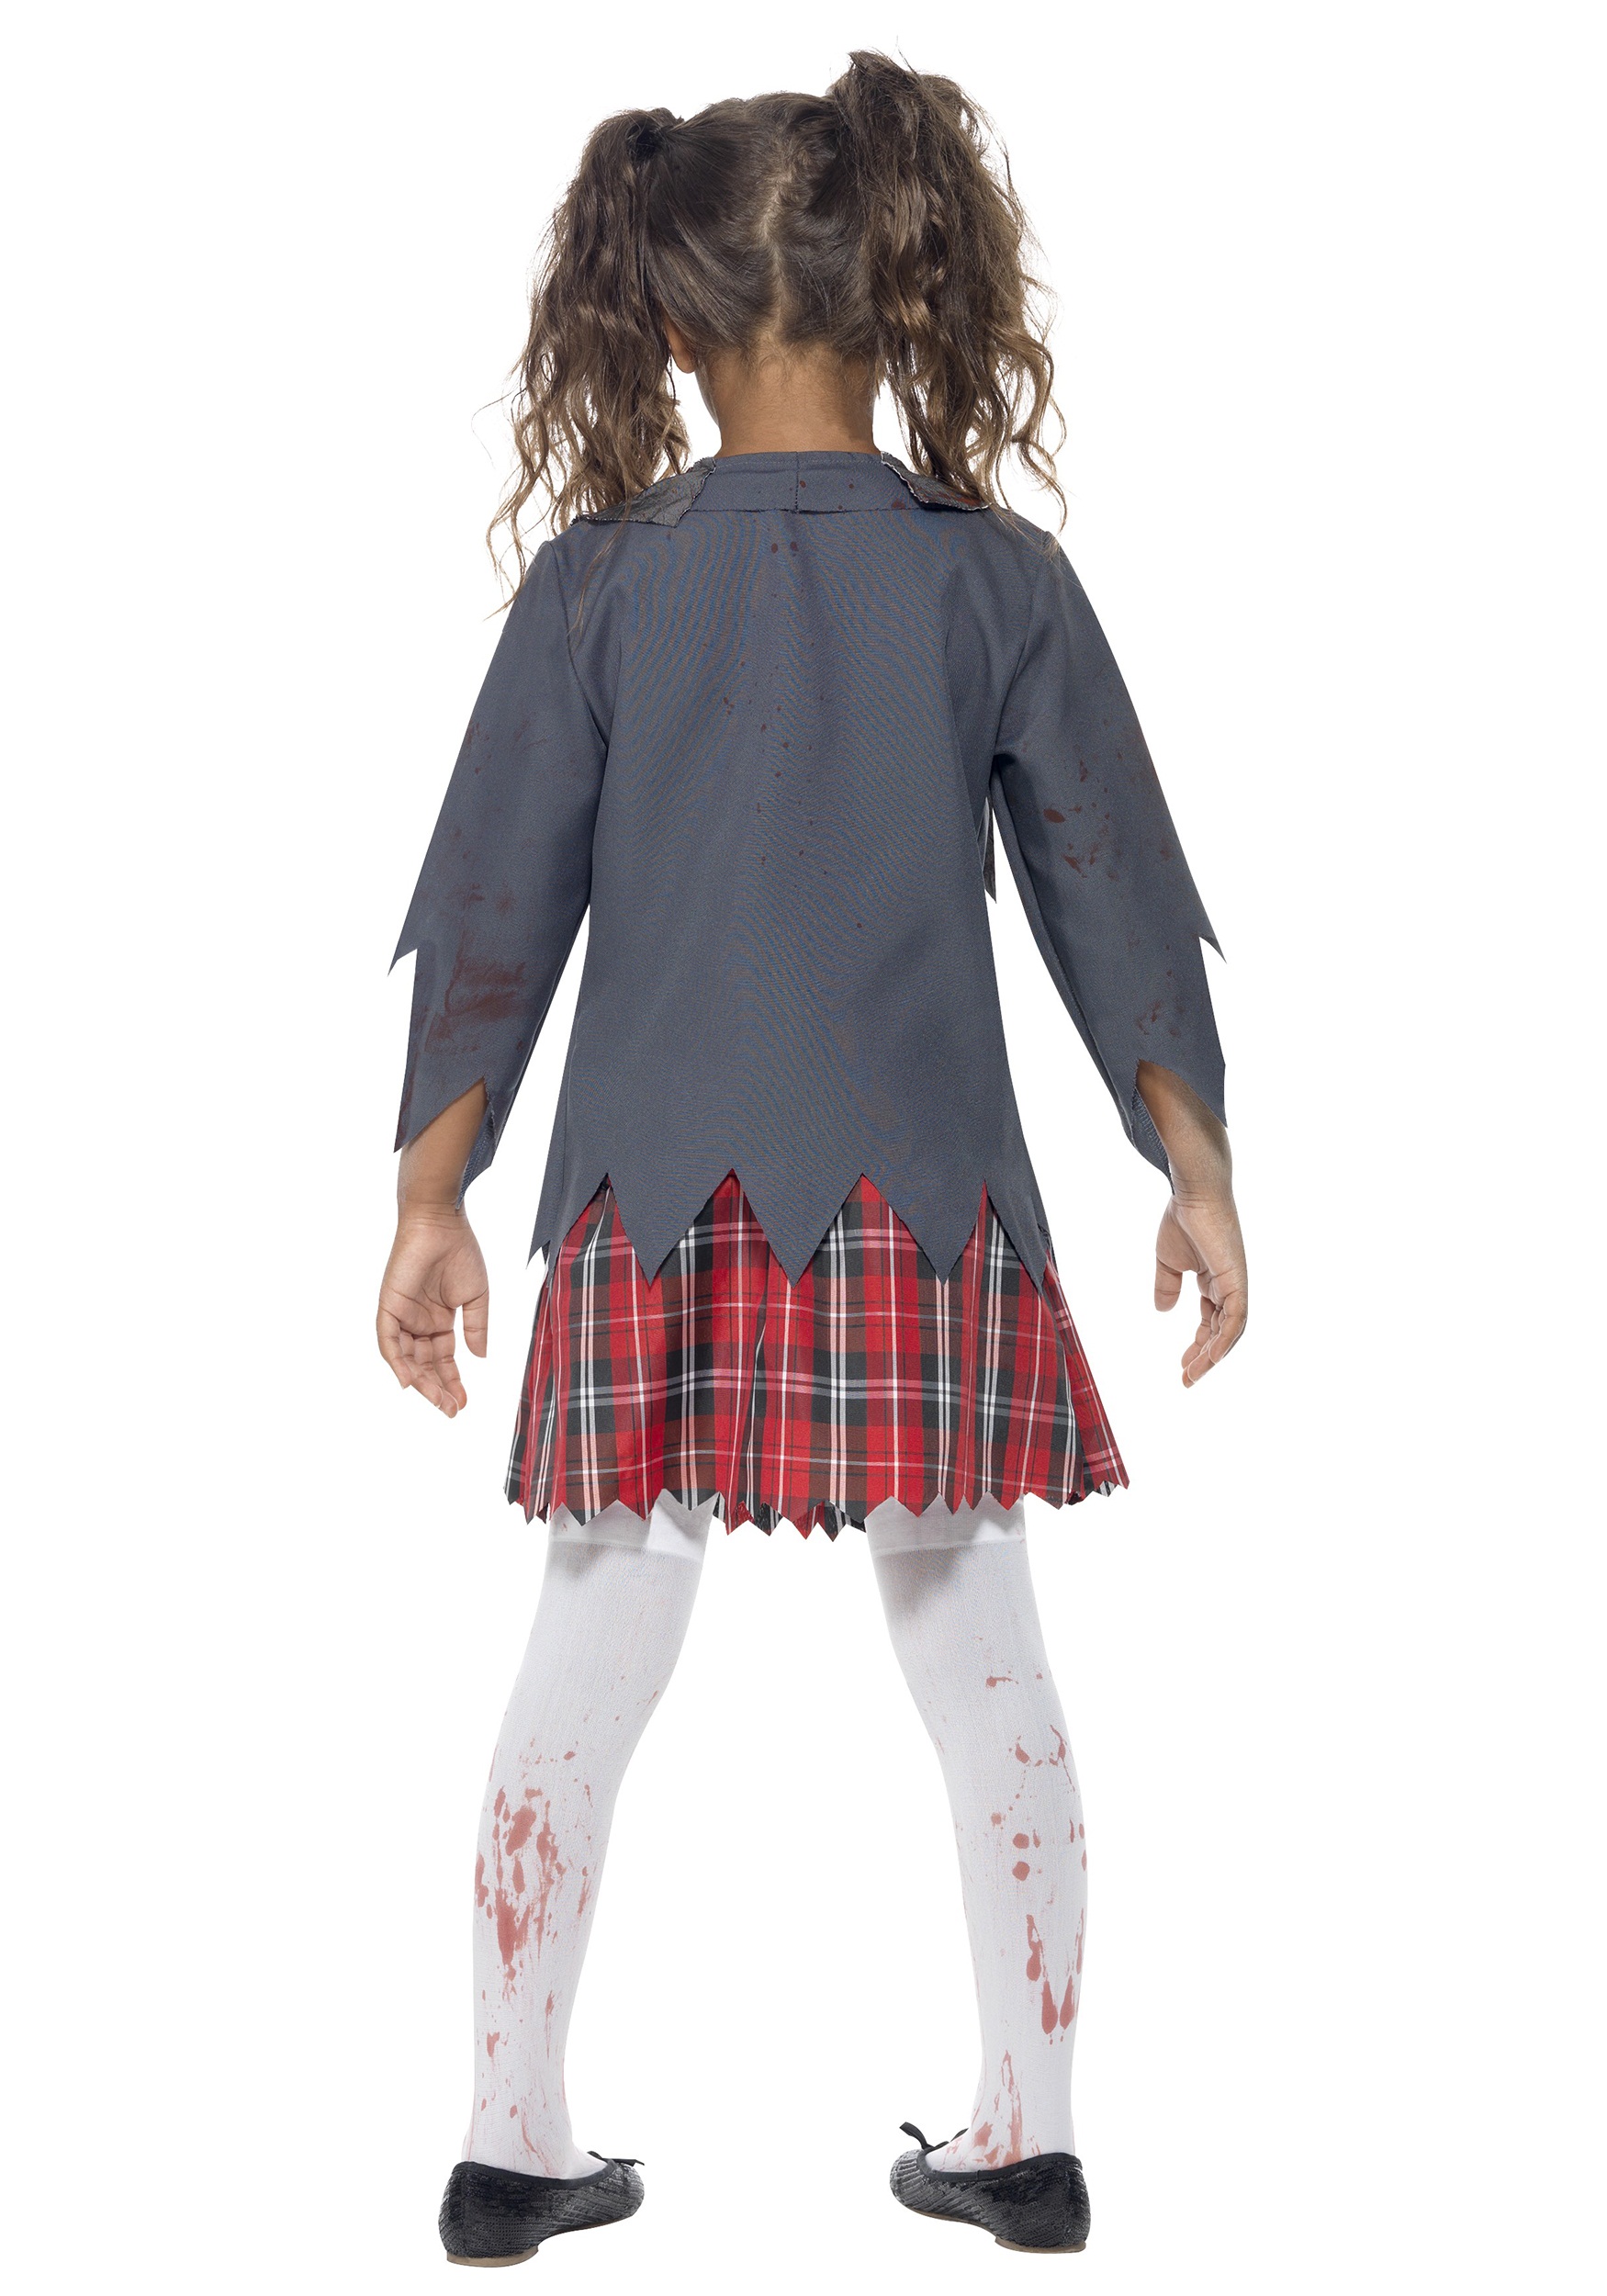 Zombie School Girl Costume For Girls